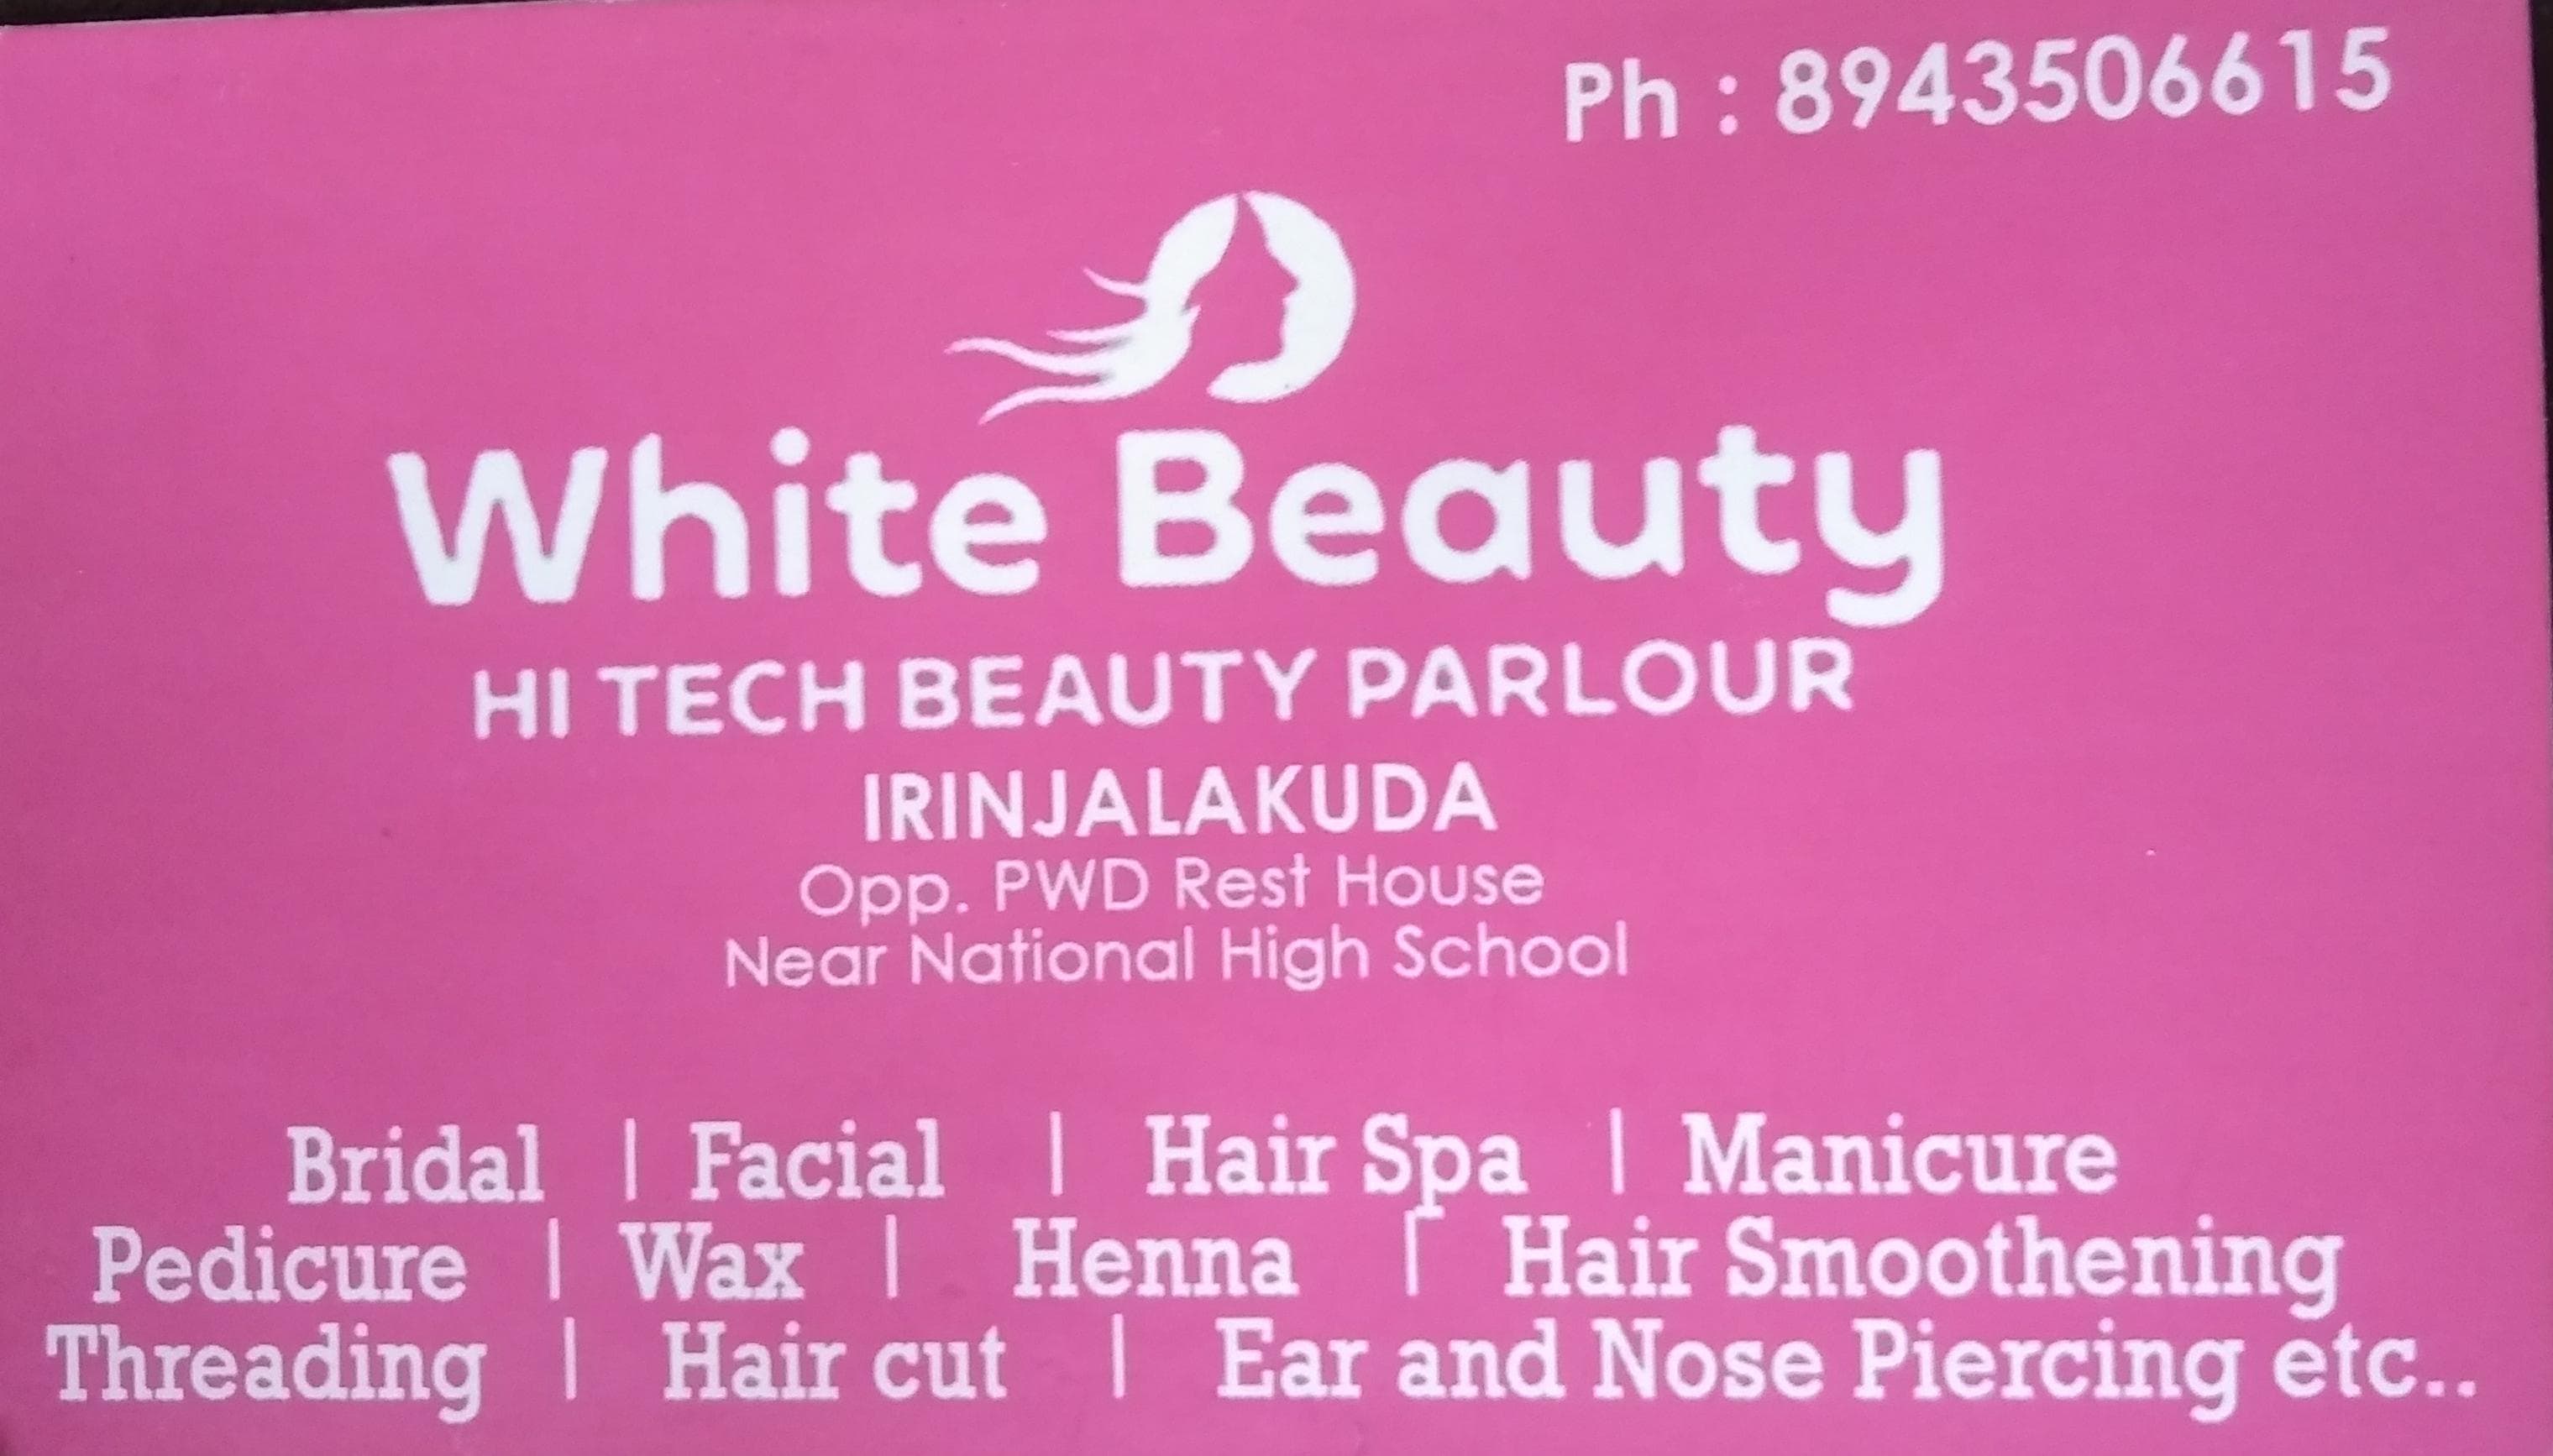 White Beauty Hi Tech  Beauty Parlour, BEAUTY PARLOUR,  service in Irinjalakuda, Thrissur